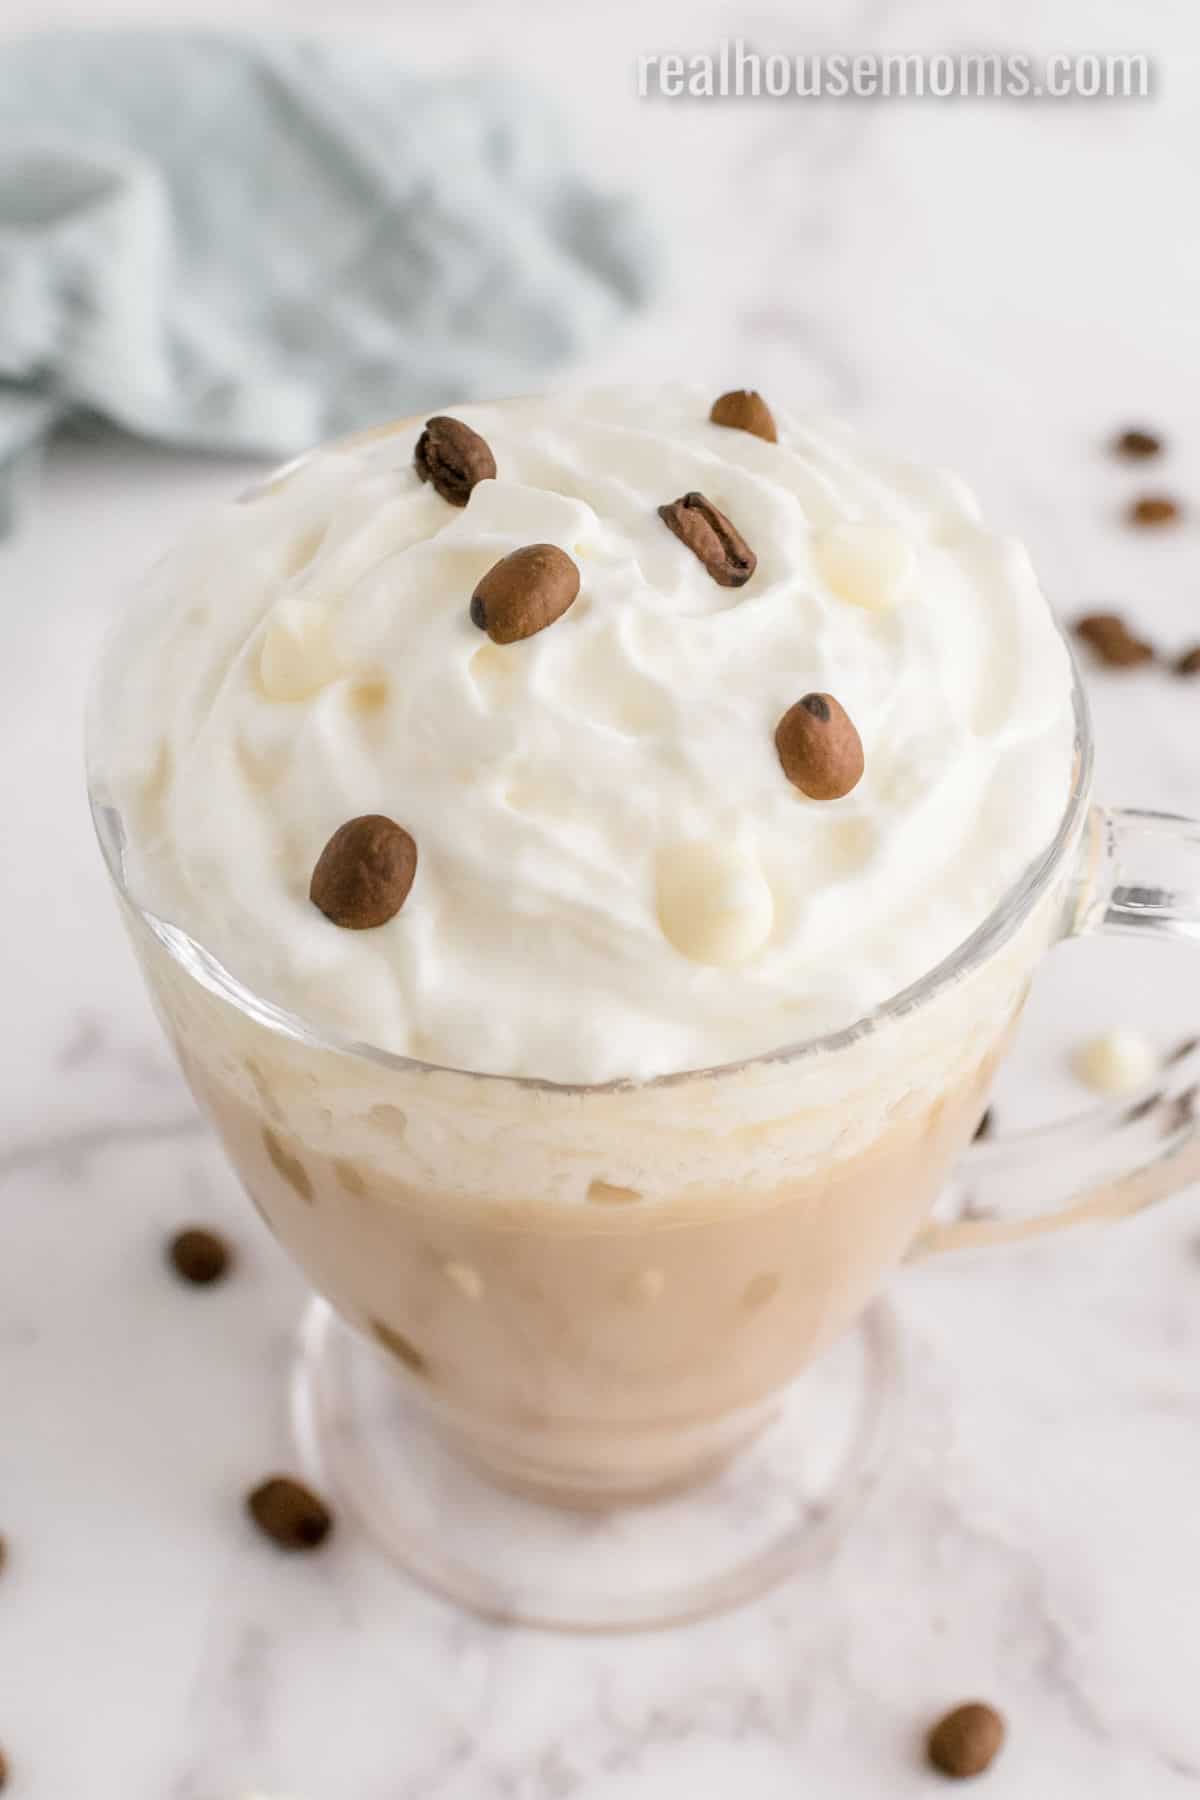 How much caffeine is in an iced pumpkin spice latte